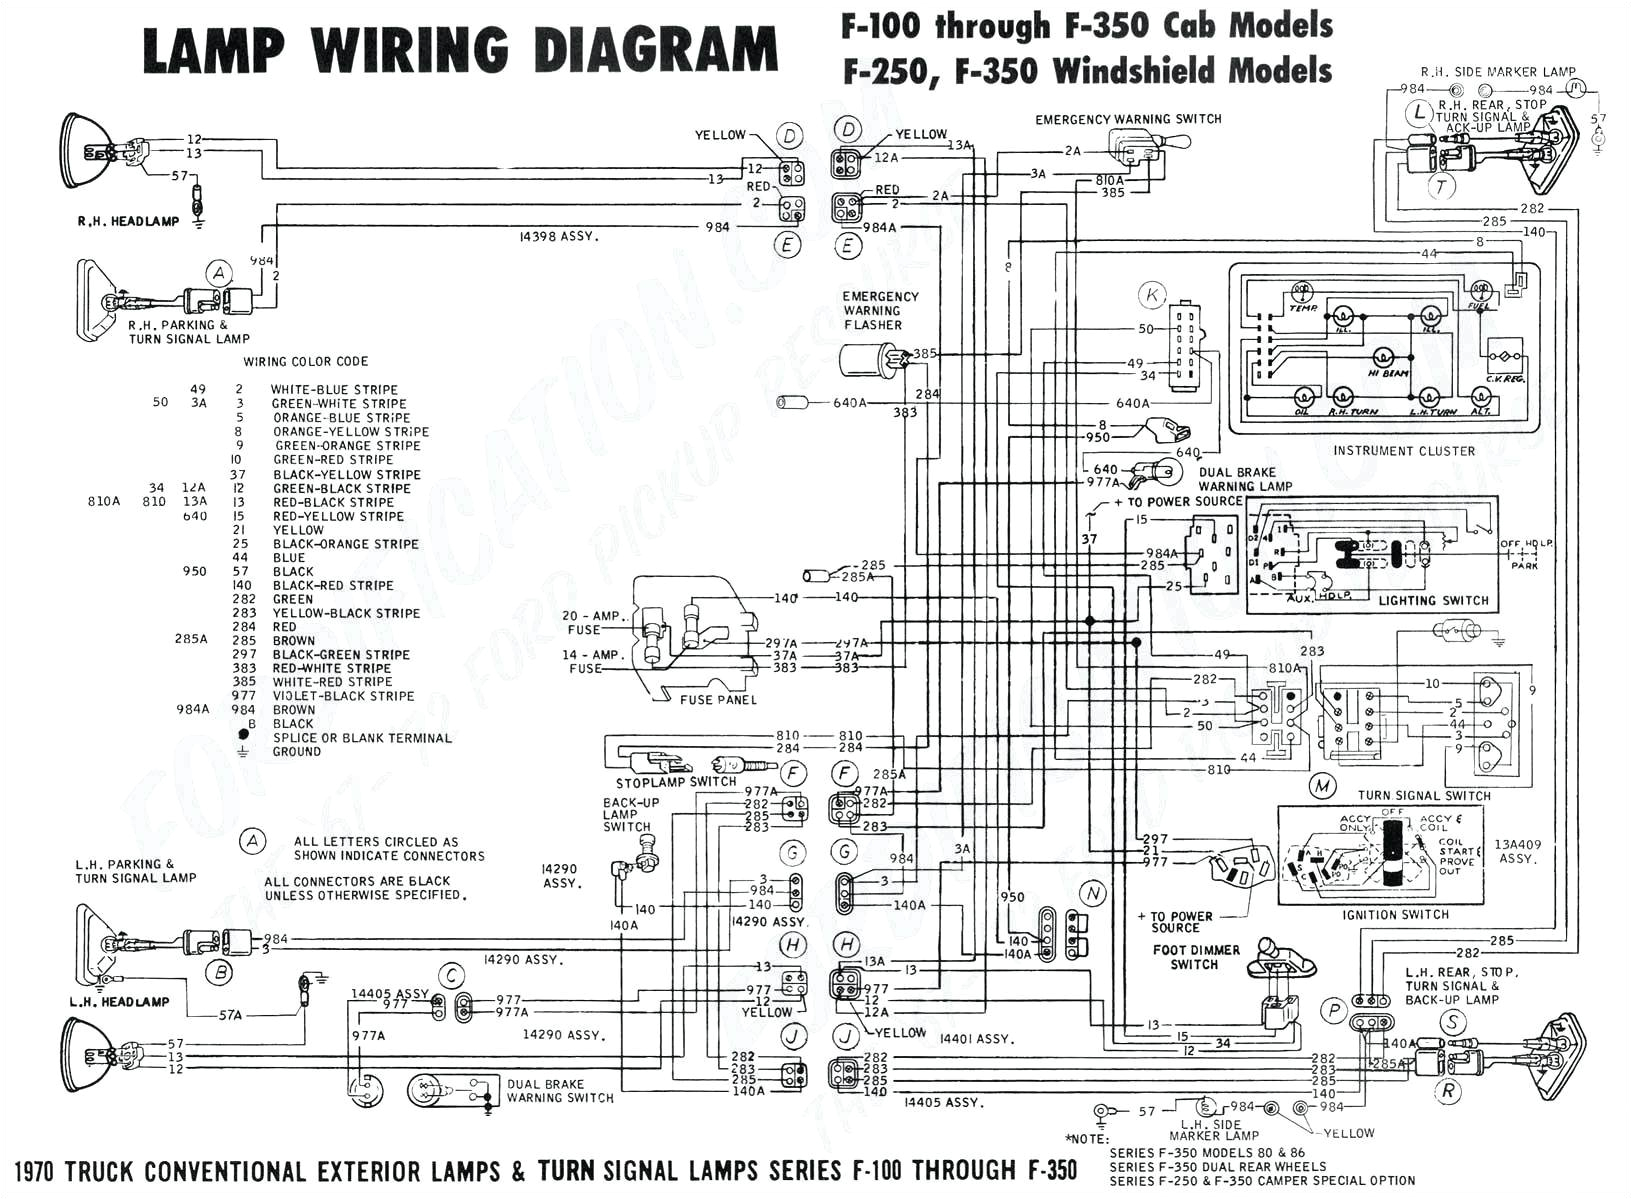 2009 fleetwood wiring diagram schema diagram database fleetwood rv electrical schematic